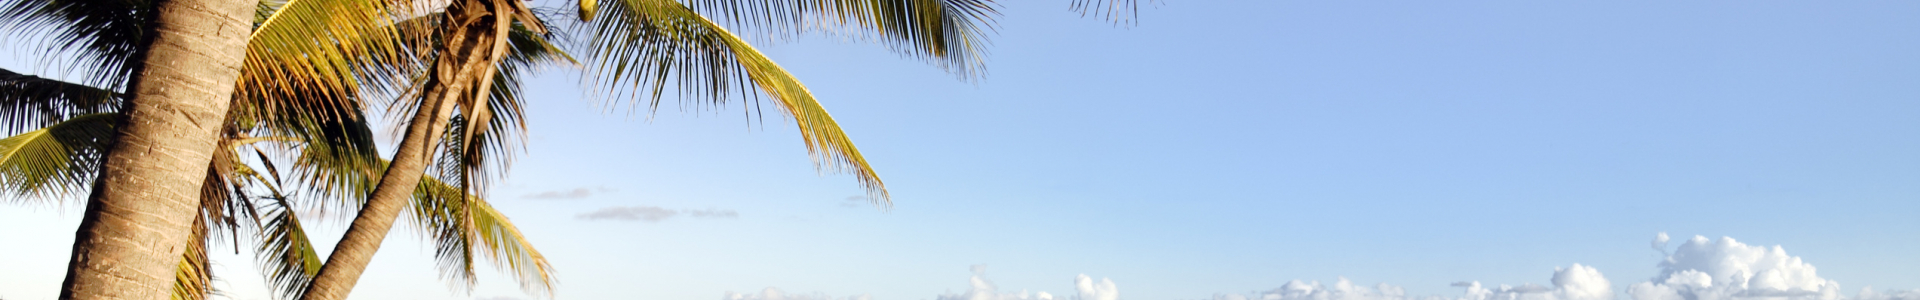 Corsair : promo vols vers les Îles de rêve, Antilles, Océan Indien...